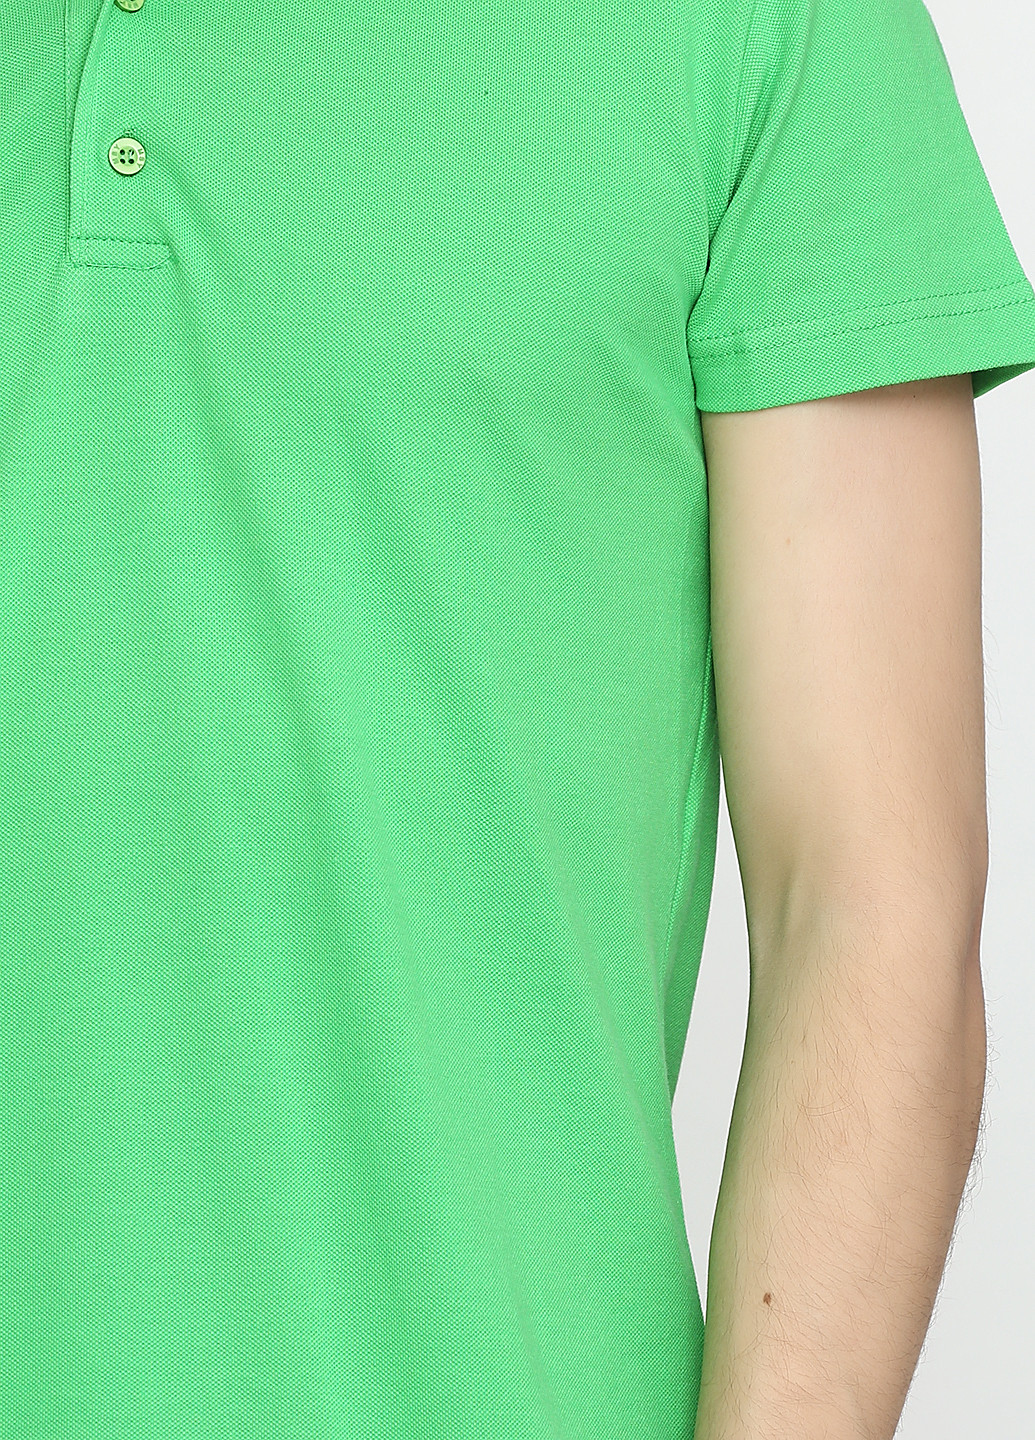 Салатовая футболка-футболка для мужчин MSY однотонная